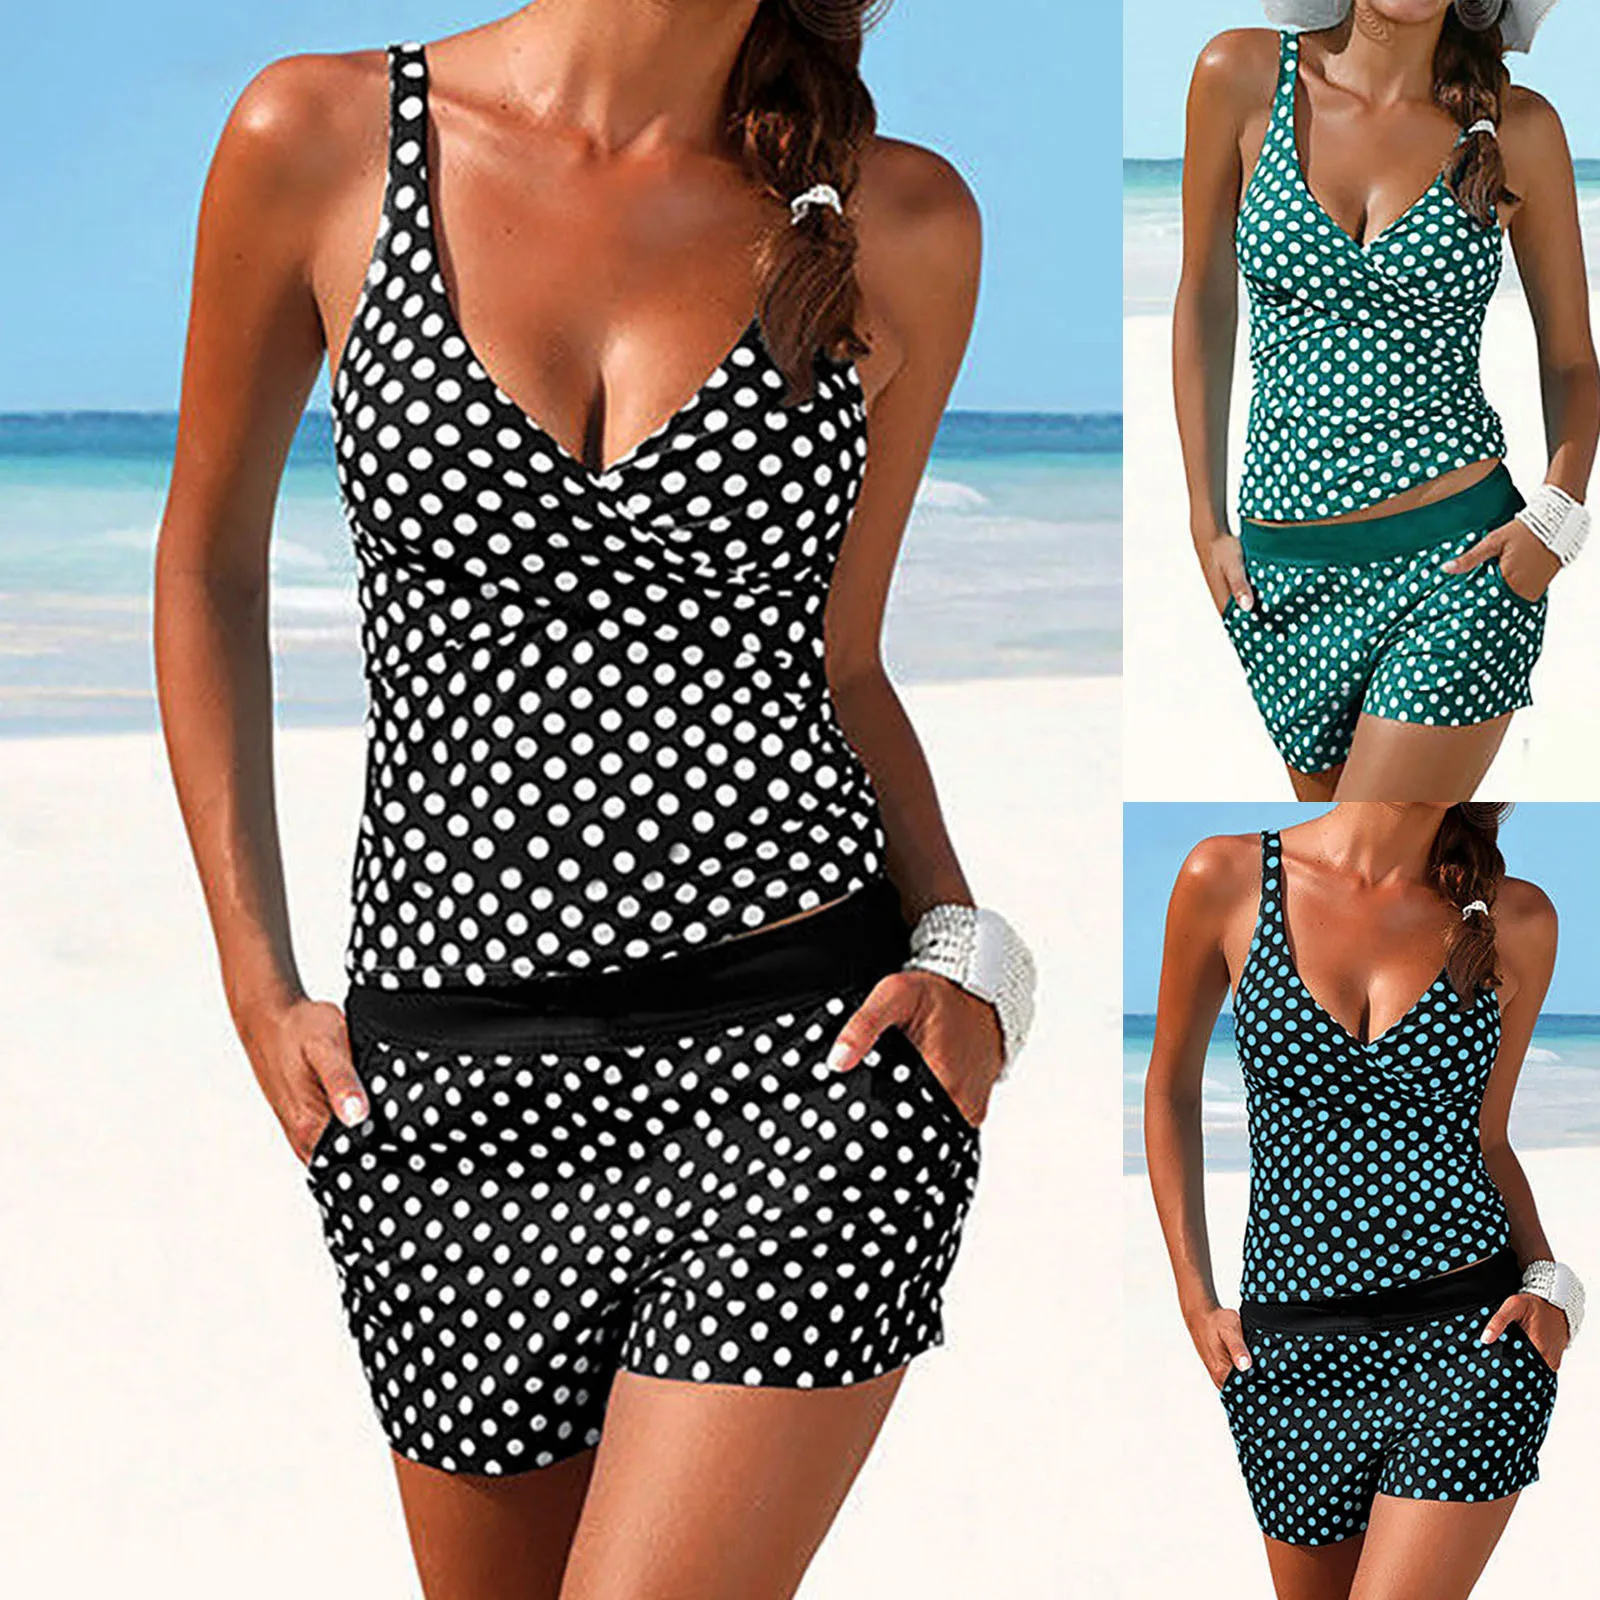 

2021 New Bikini Hight Waist Women Plus Size Print Tankini Swimjupmsuit Swimsuit Beachwear Padded Swimwear maillot de bain